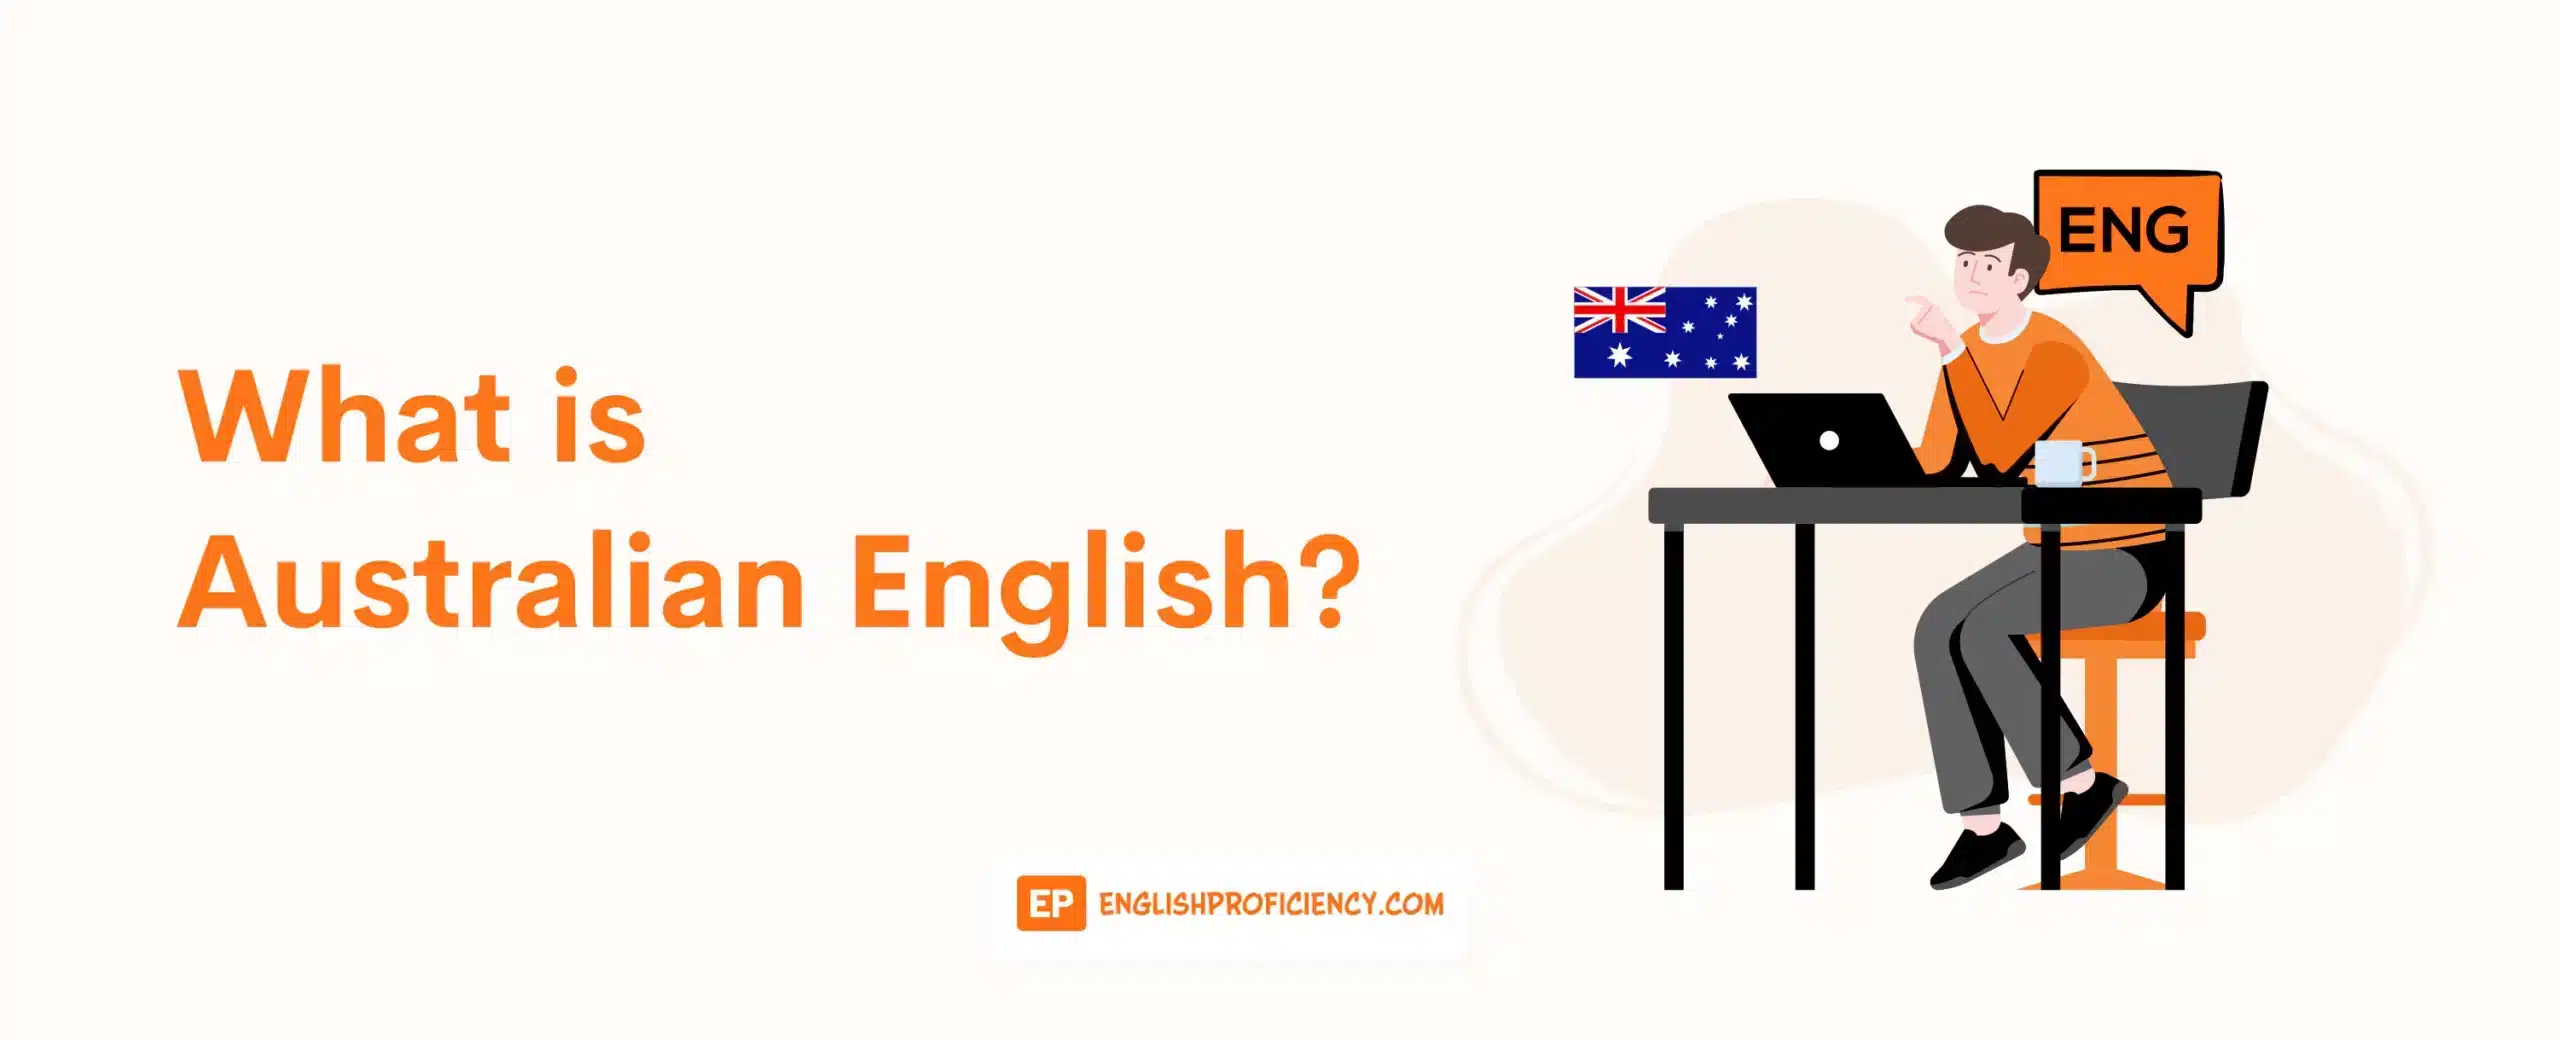 What is Australian English